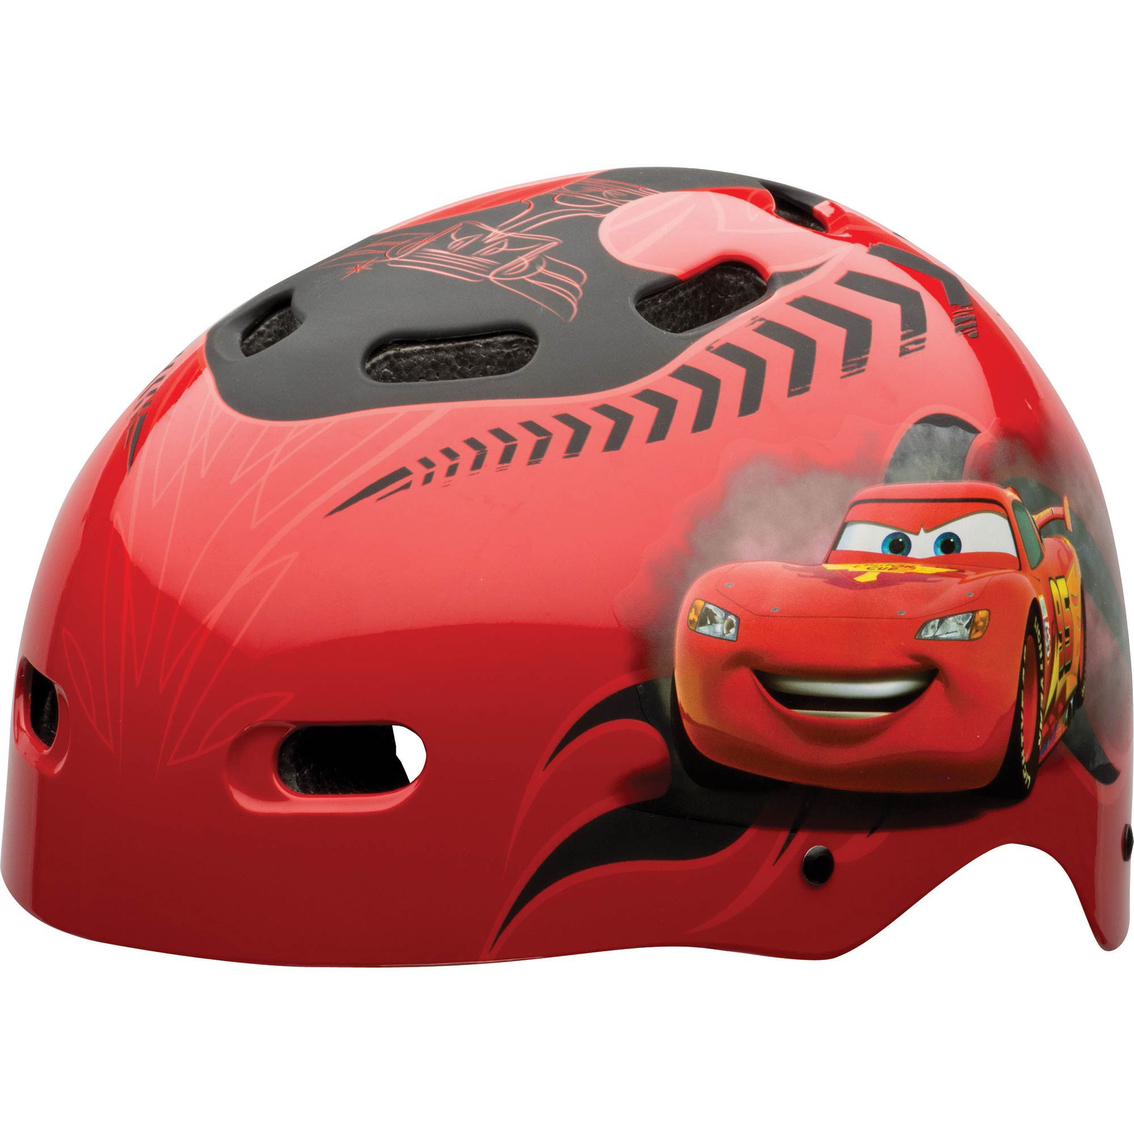 Disney Cars Kinder Helm made by Powerslide NEU 